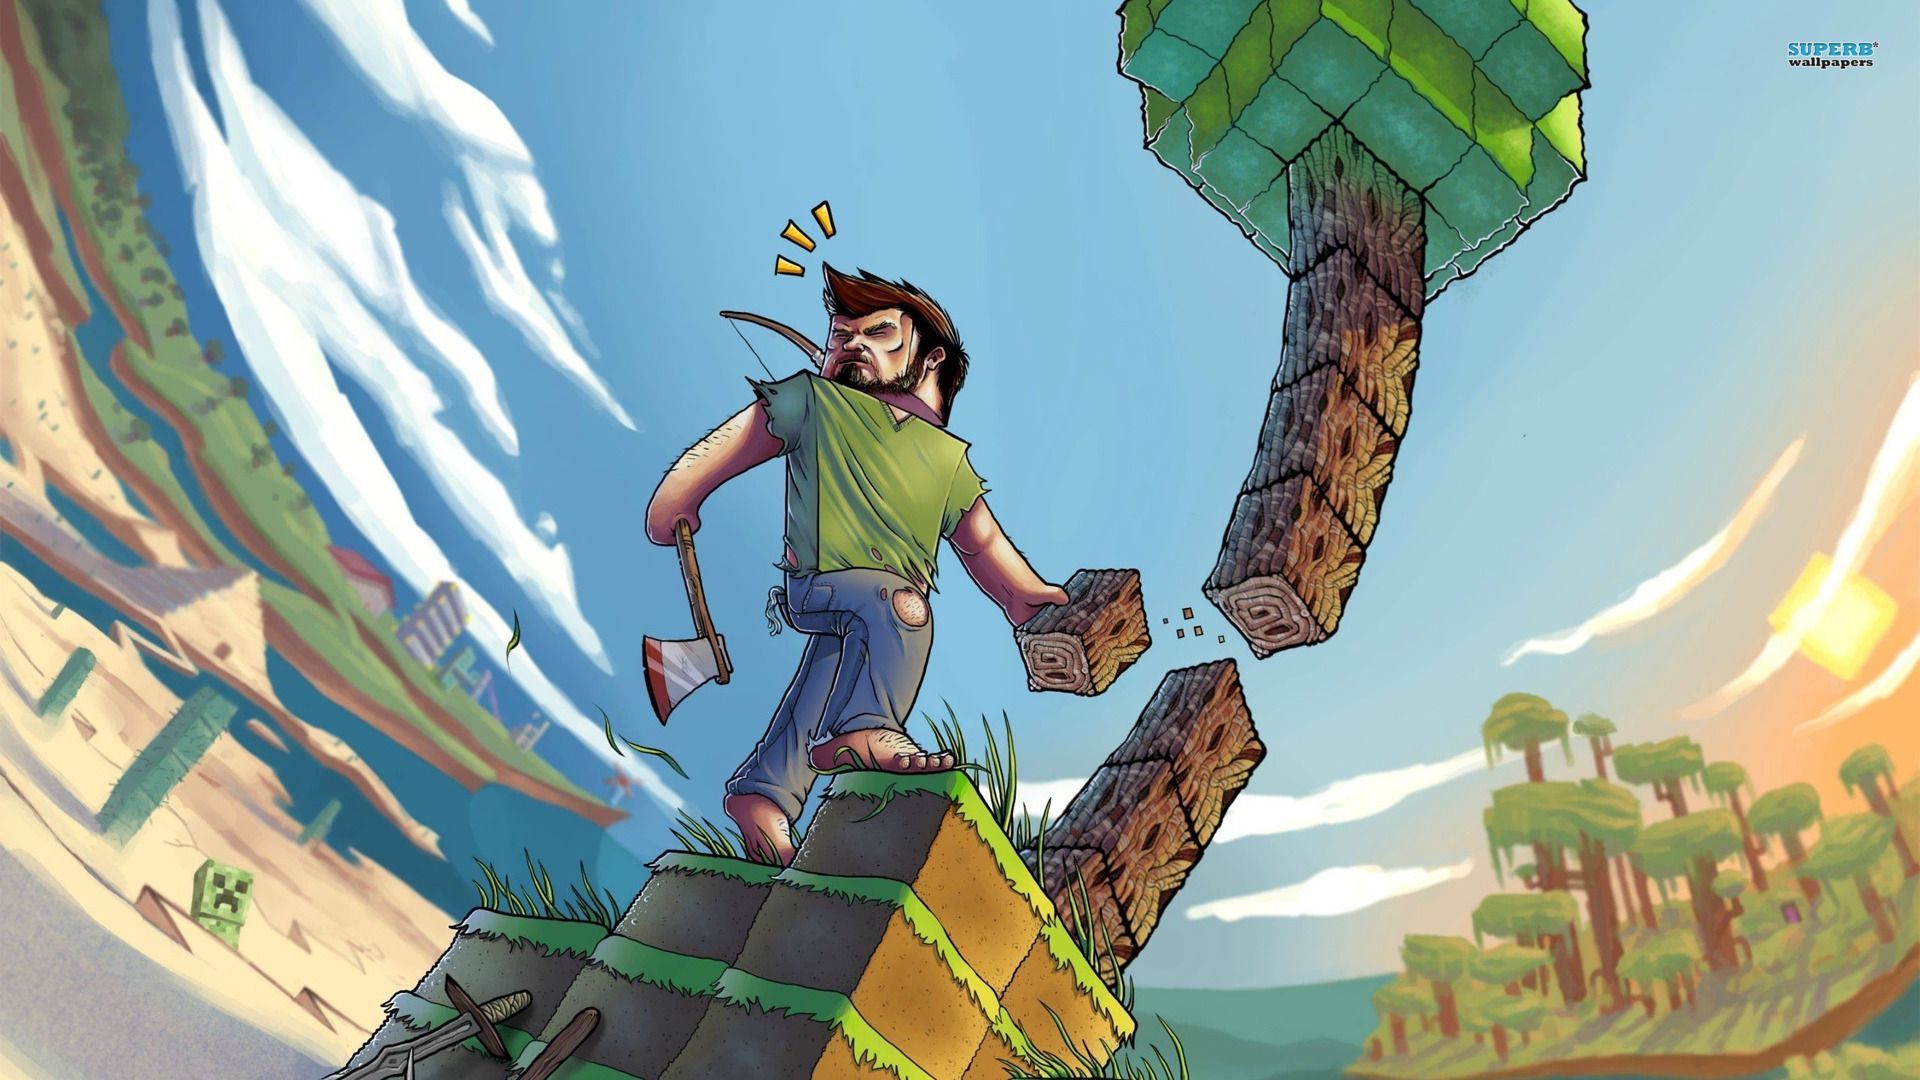 Alt Hi-def Minecraft wallpaper - Game wallpapers - #16313